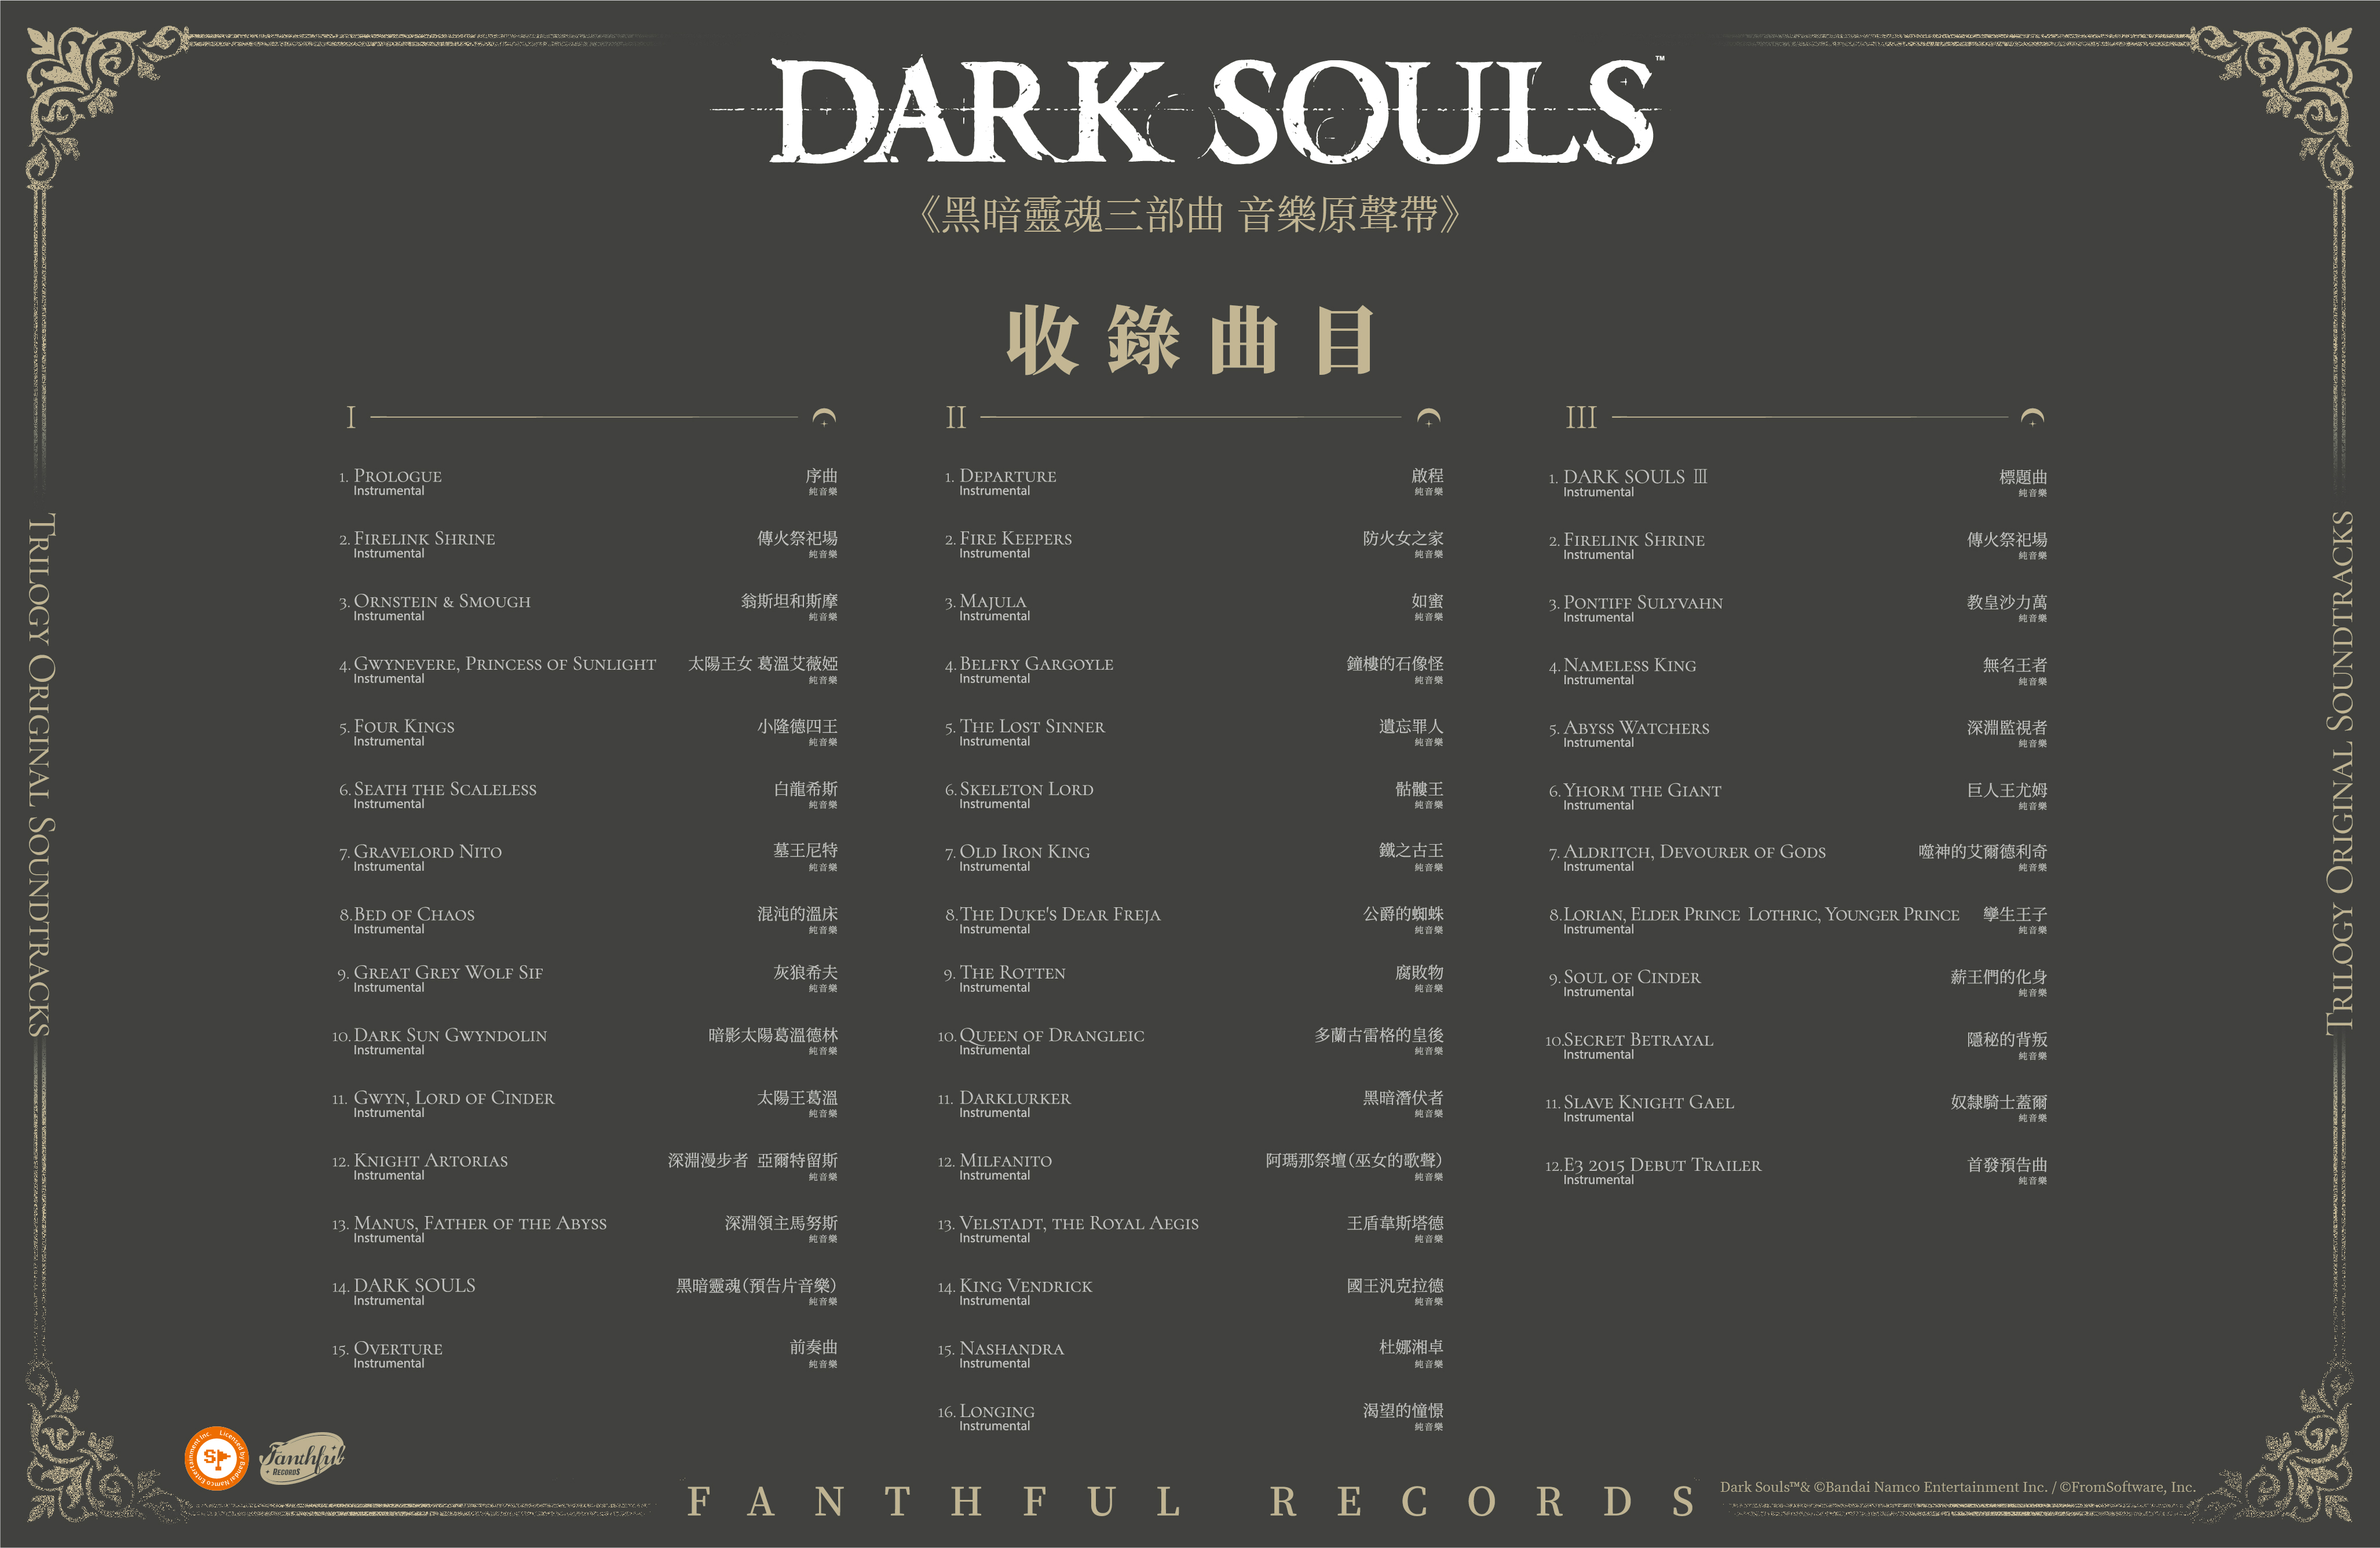 FANTHFUL RECORDS 傾情呈現《黑暗靈魂三部曲》音樂原聲帶